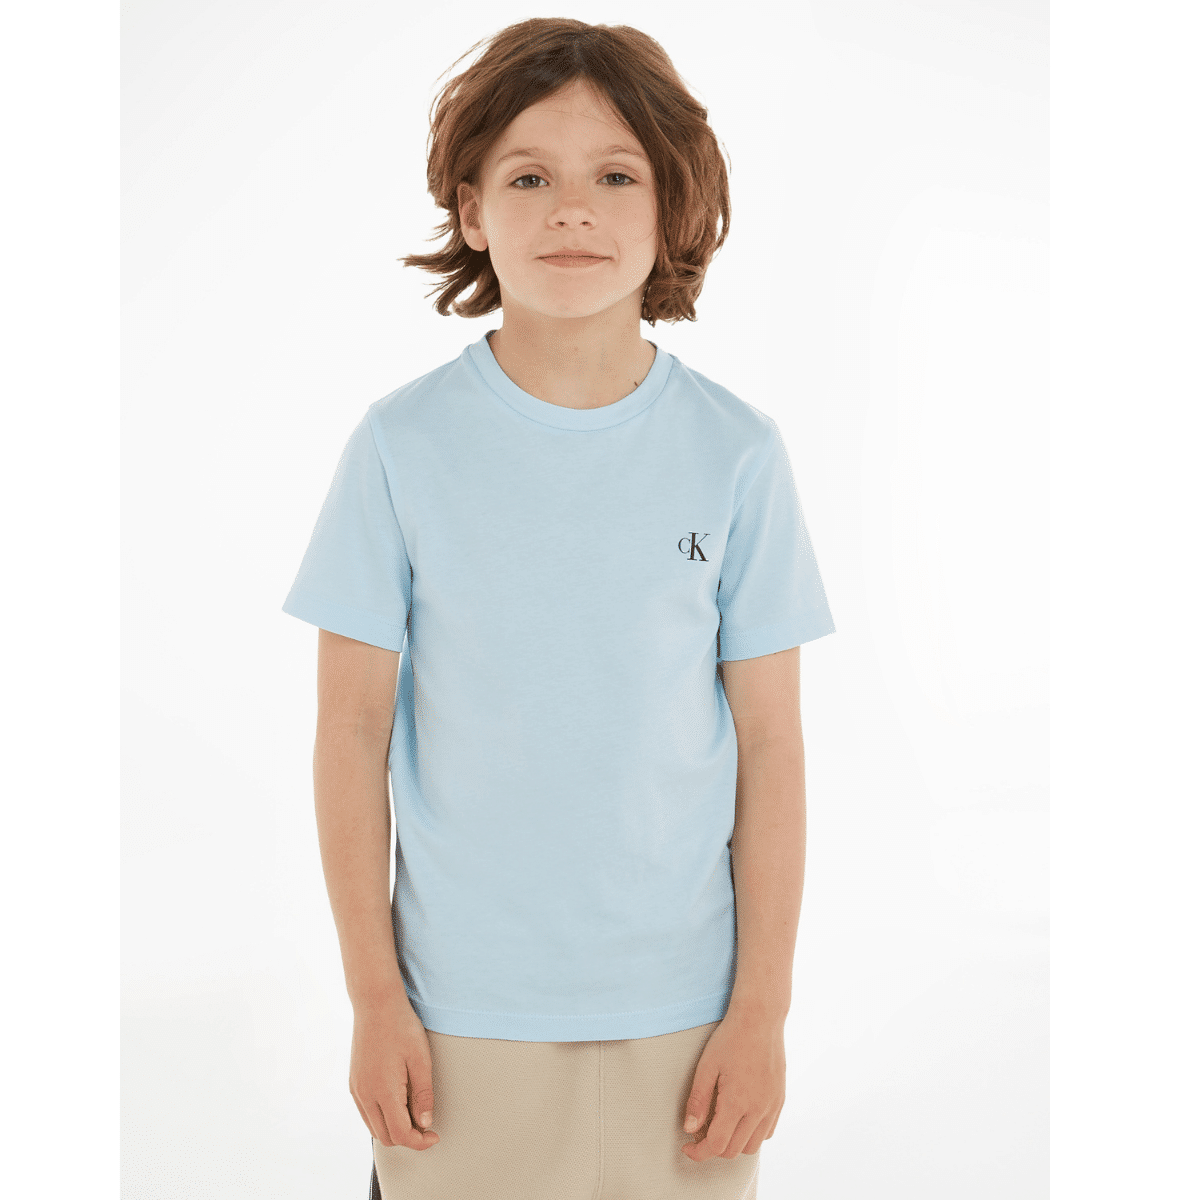 calvin klein boys tshirts in pale blue on model